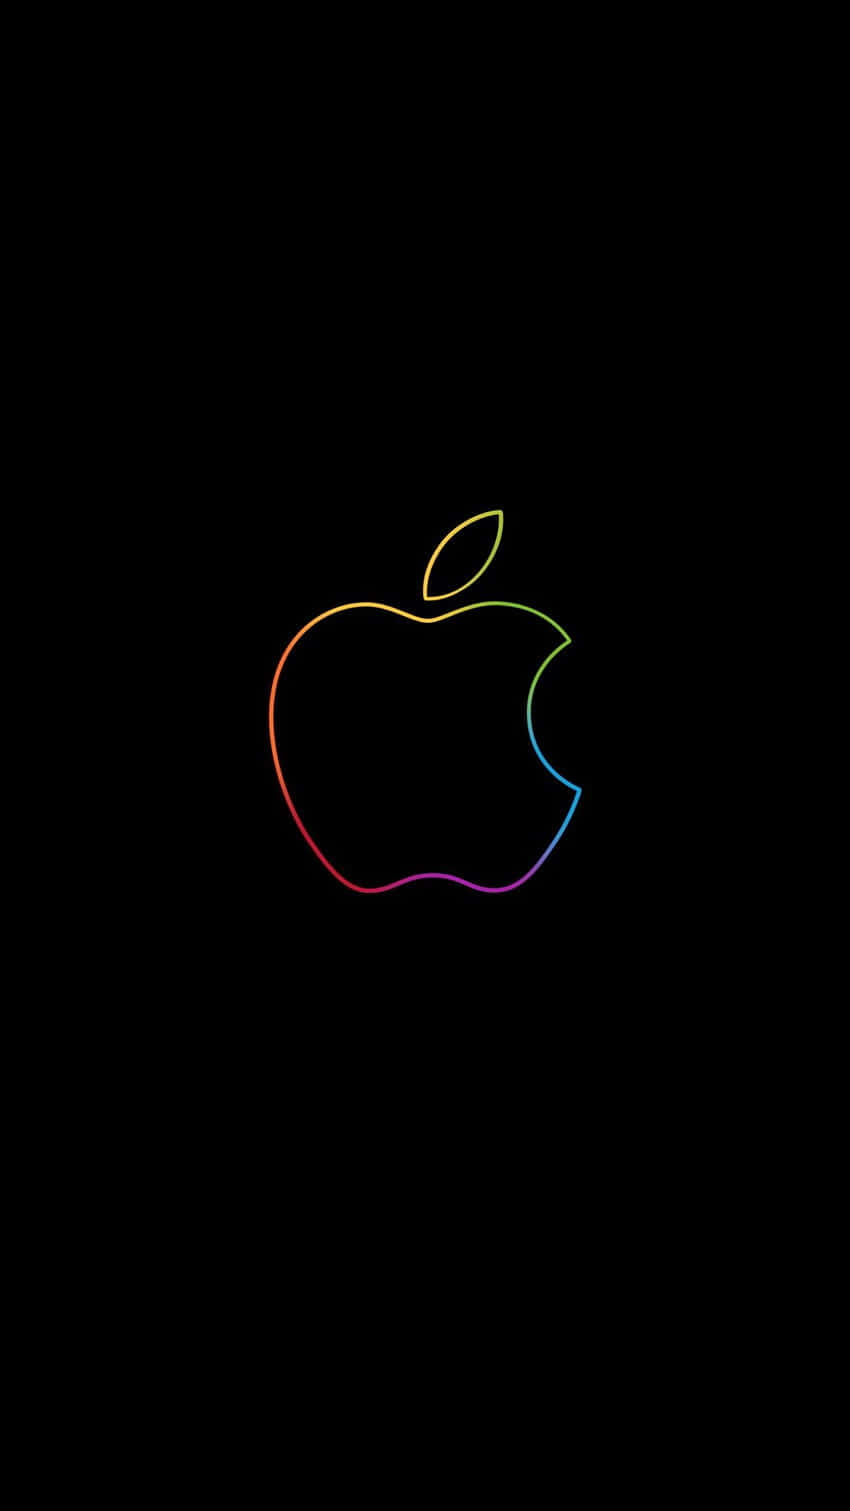 Retro Apple Logo Illustration Wallpaper